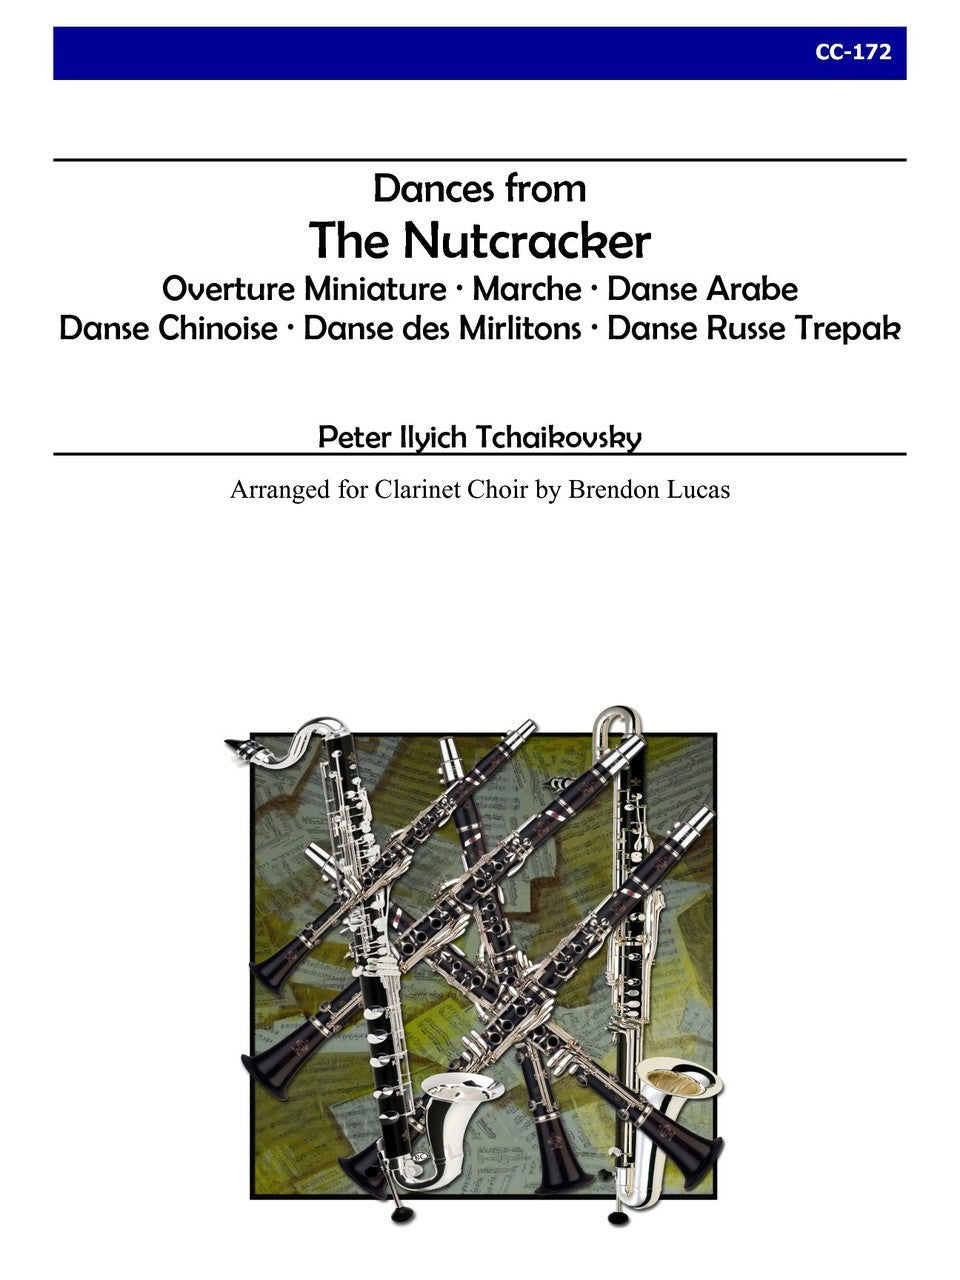 Tchaikovsky (arr. Brendon Lucas) -  Dances from The Nutcracker for Clarinet Choir